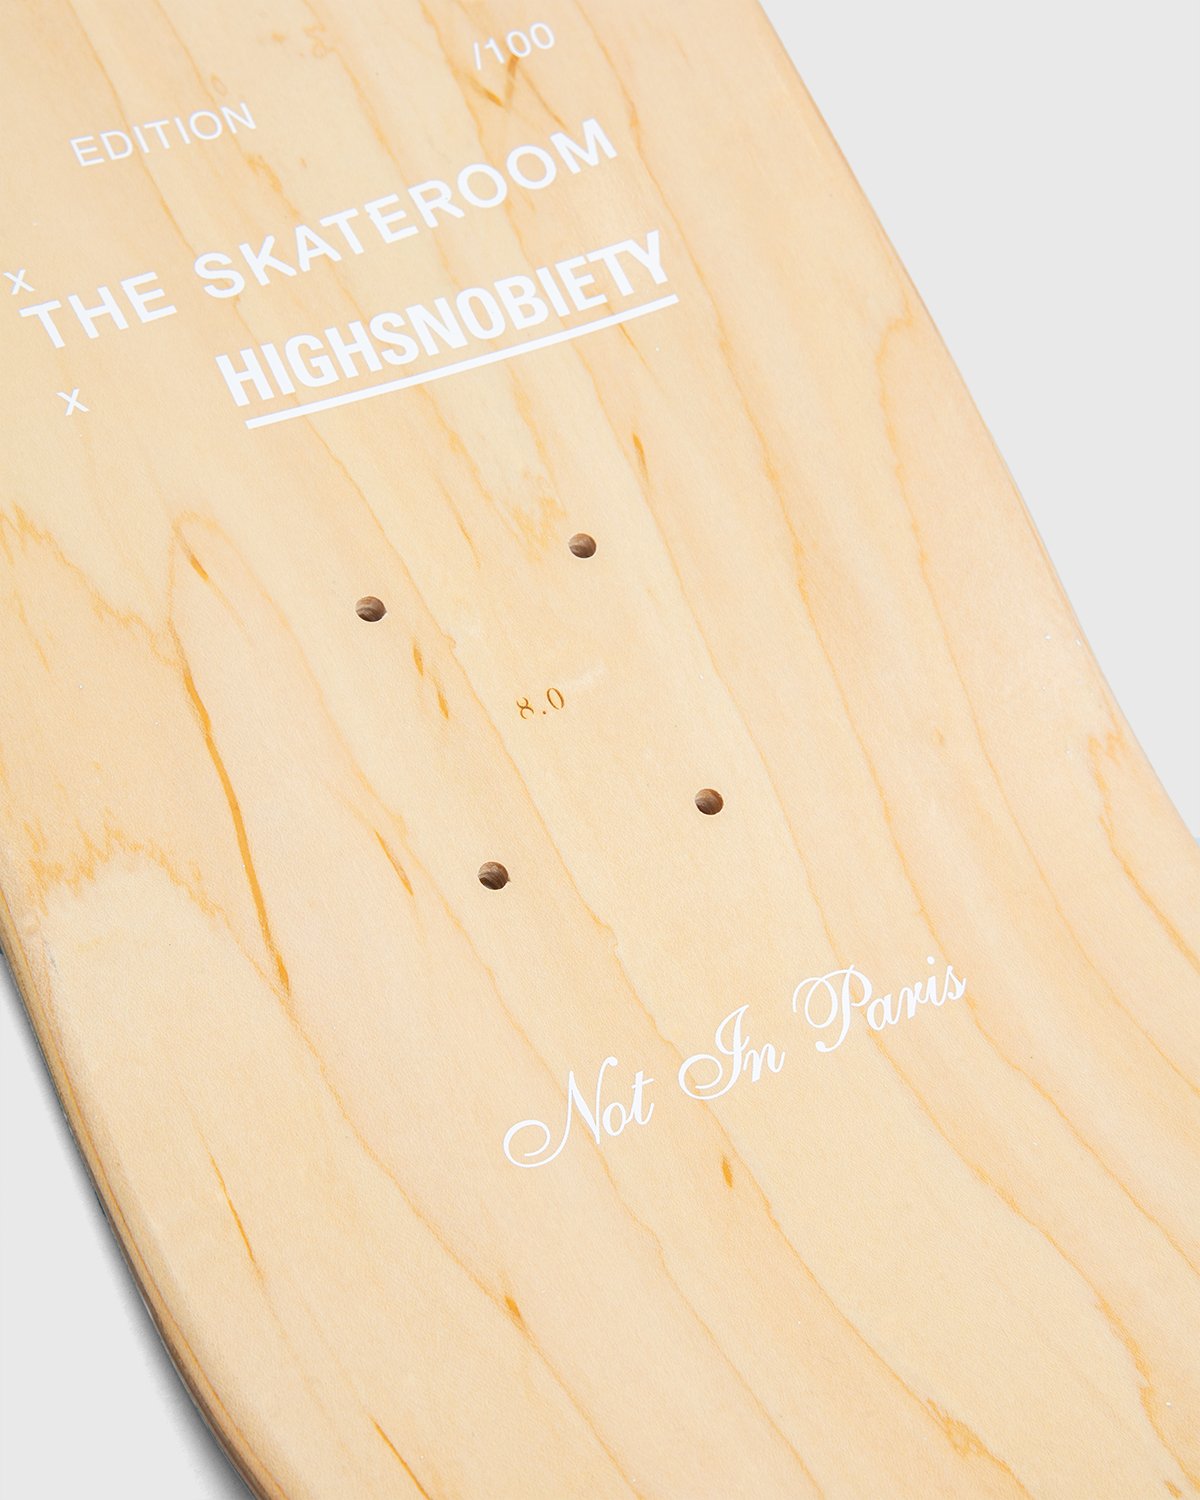 The Skateroom x Highsnobiety - Paul Mccarthy “Tree” Skate Deck Set - Lifestyle - Green - Image 4